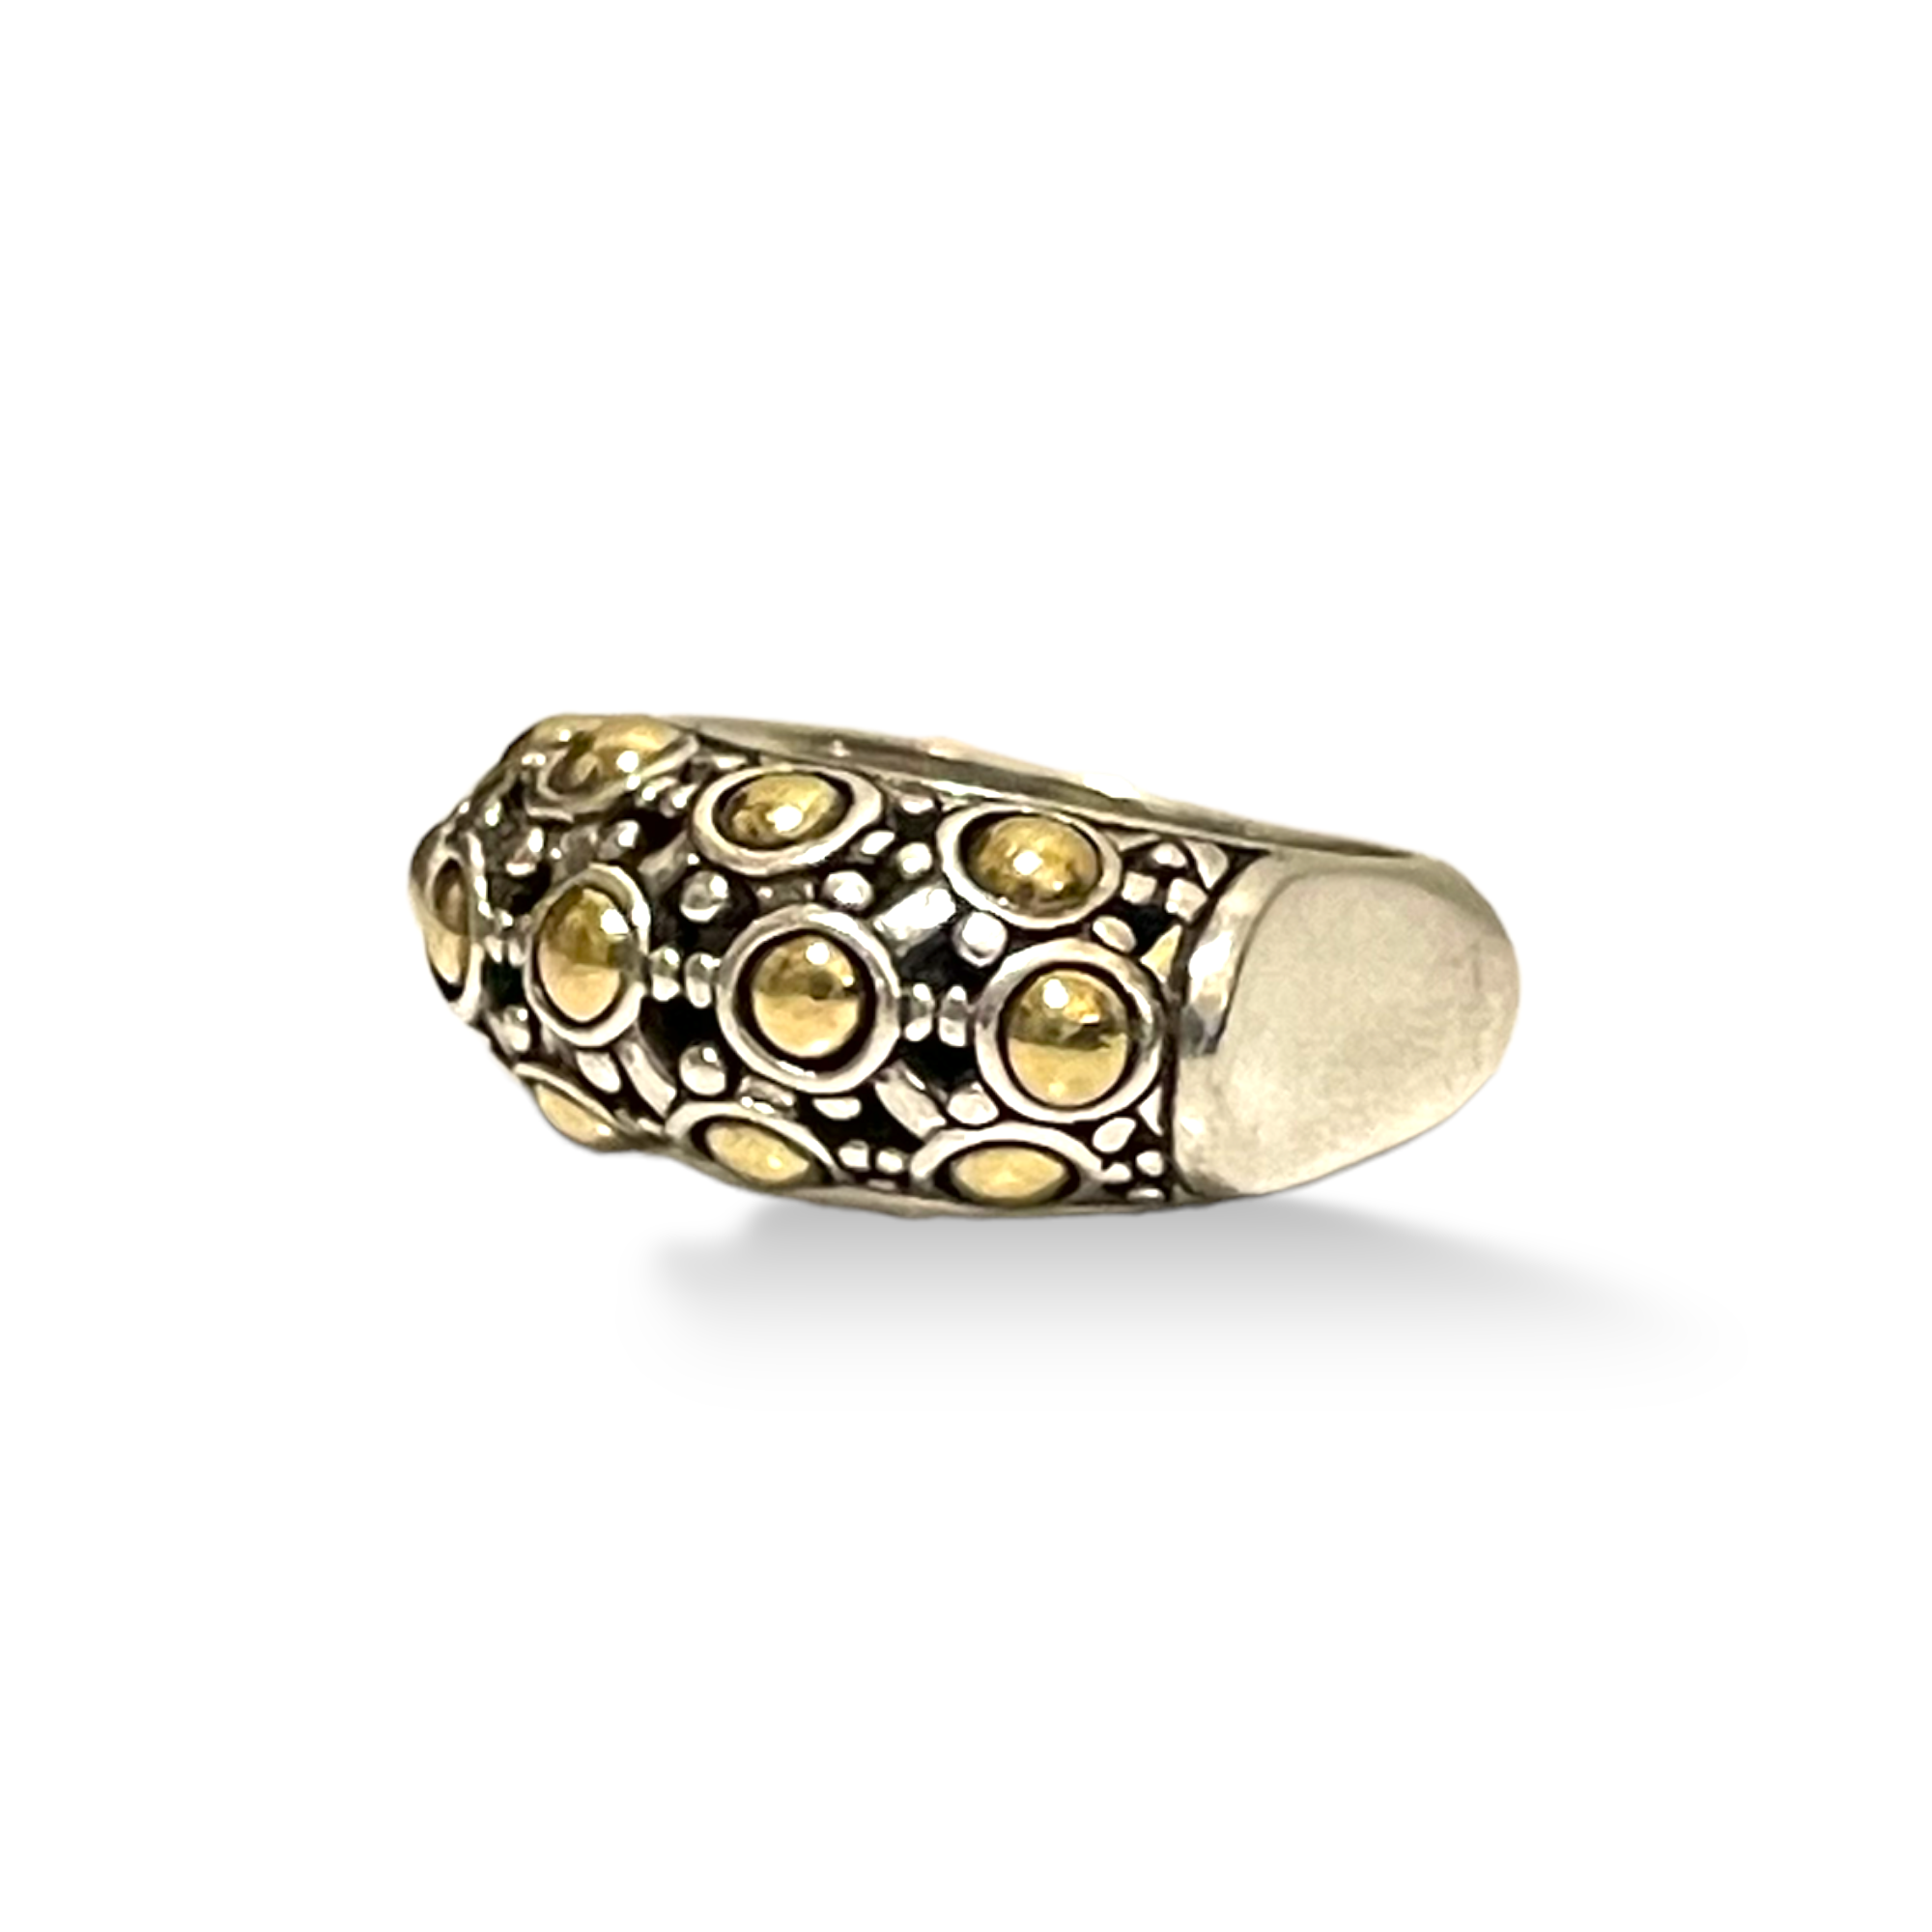 JOHN HARDY Dot Jaisalmer Collection .925 & 18k Gold Rectangular Ring |Size: 7|